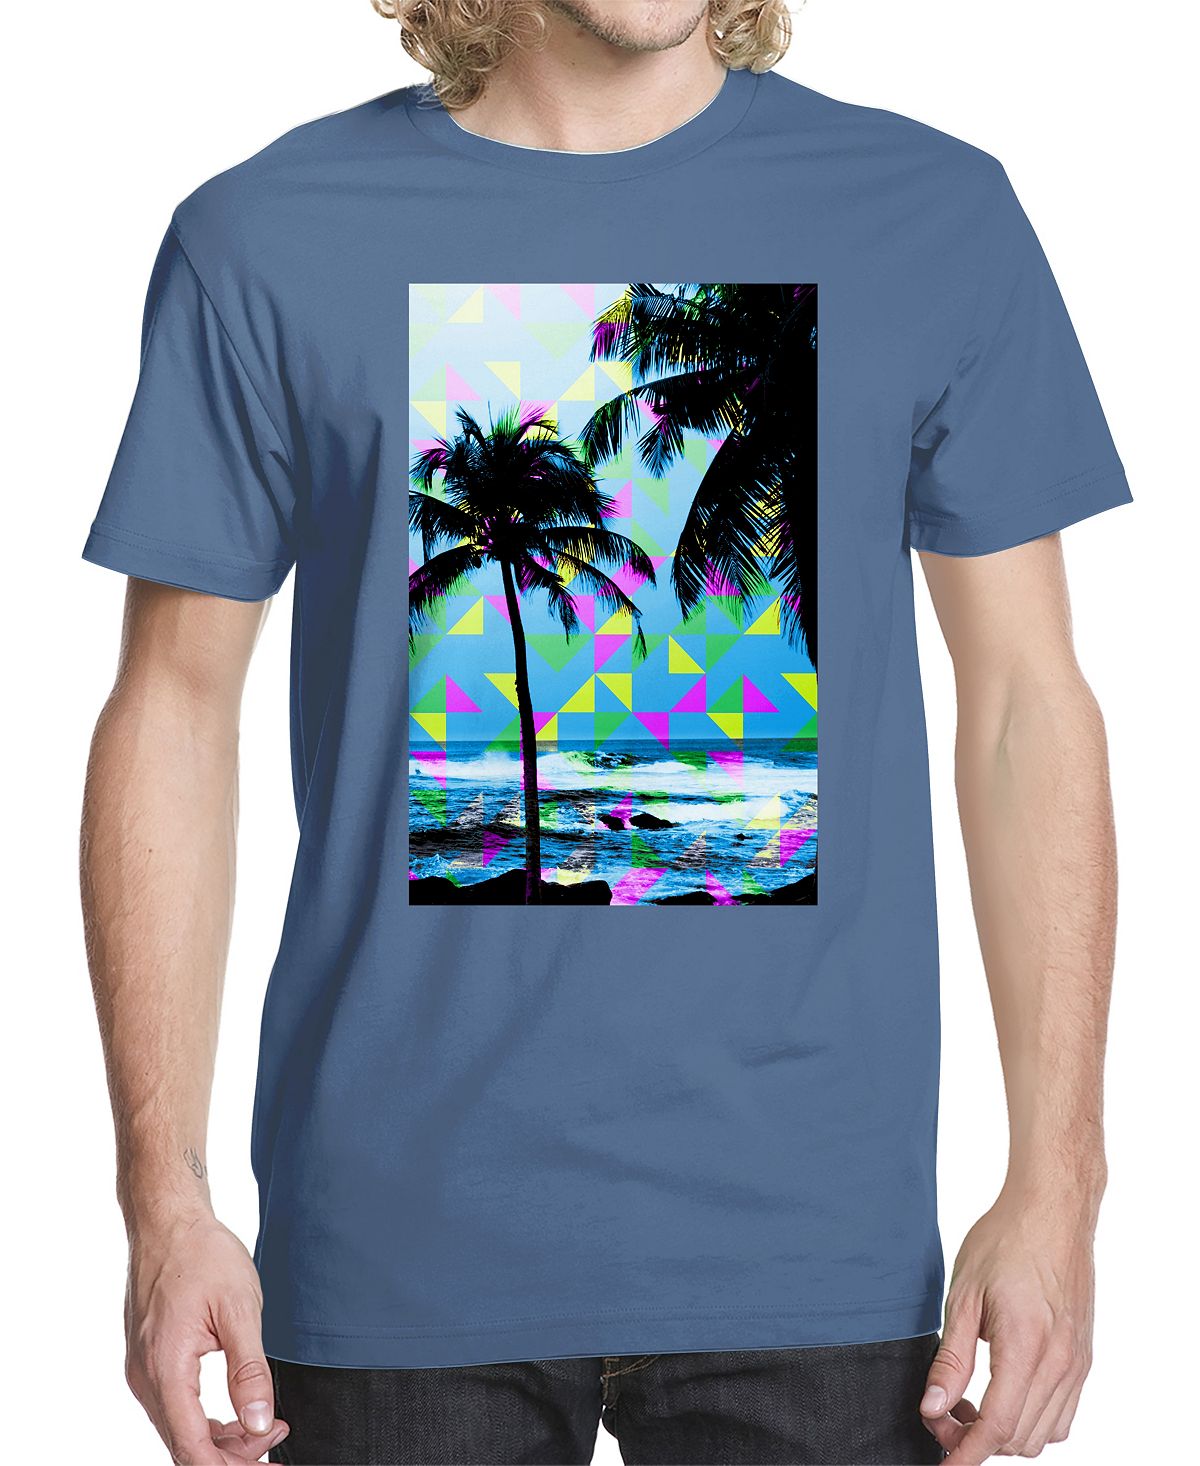 Мужская футболка с рисунком triangle tropic Beachwood, мульти